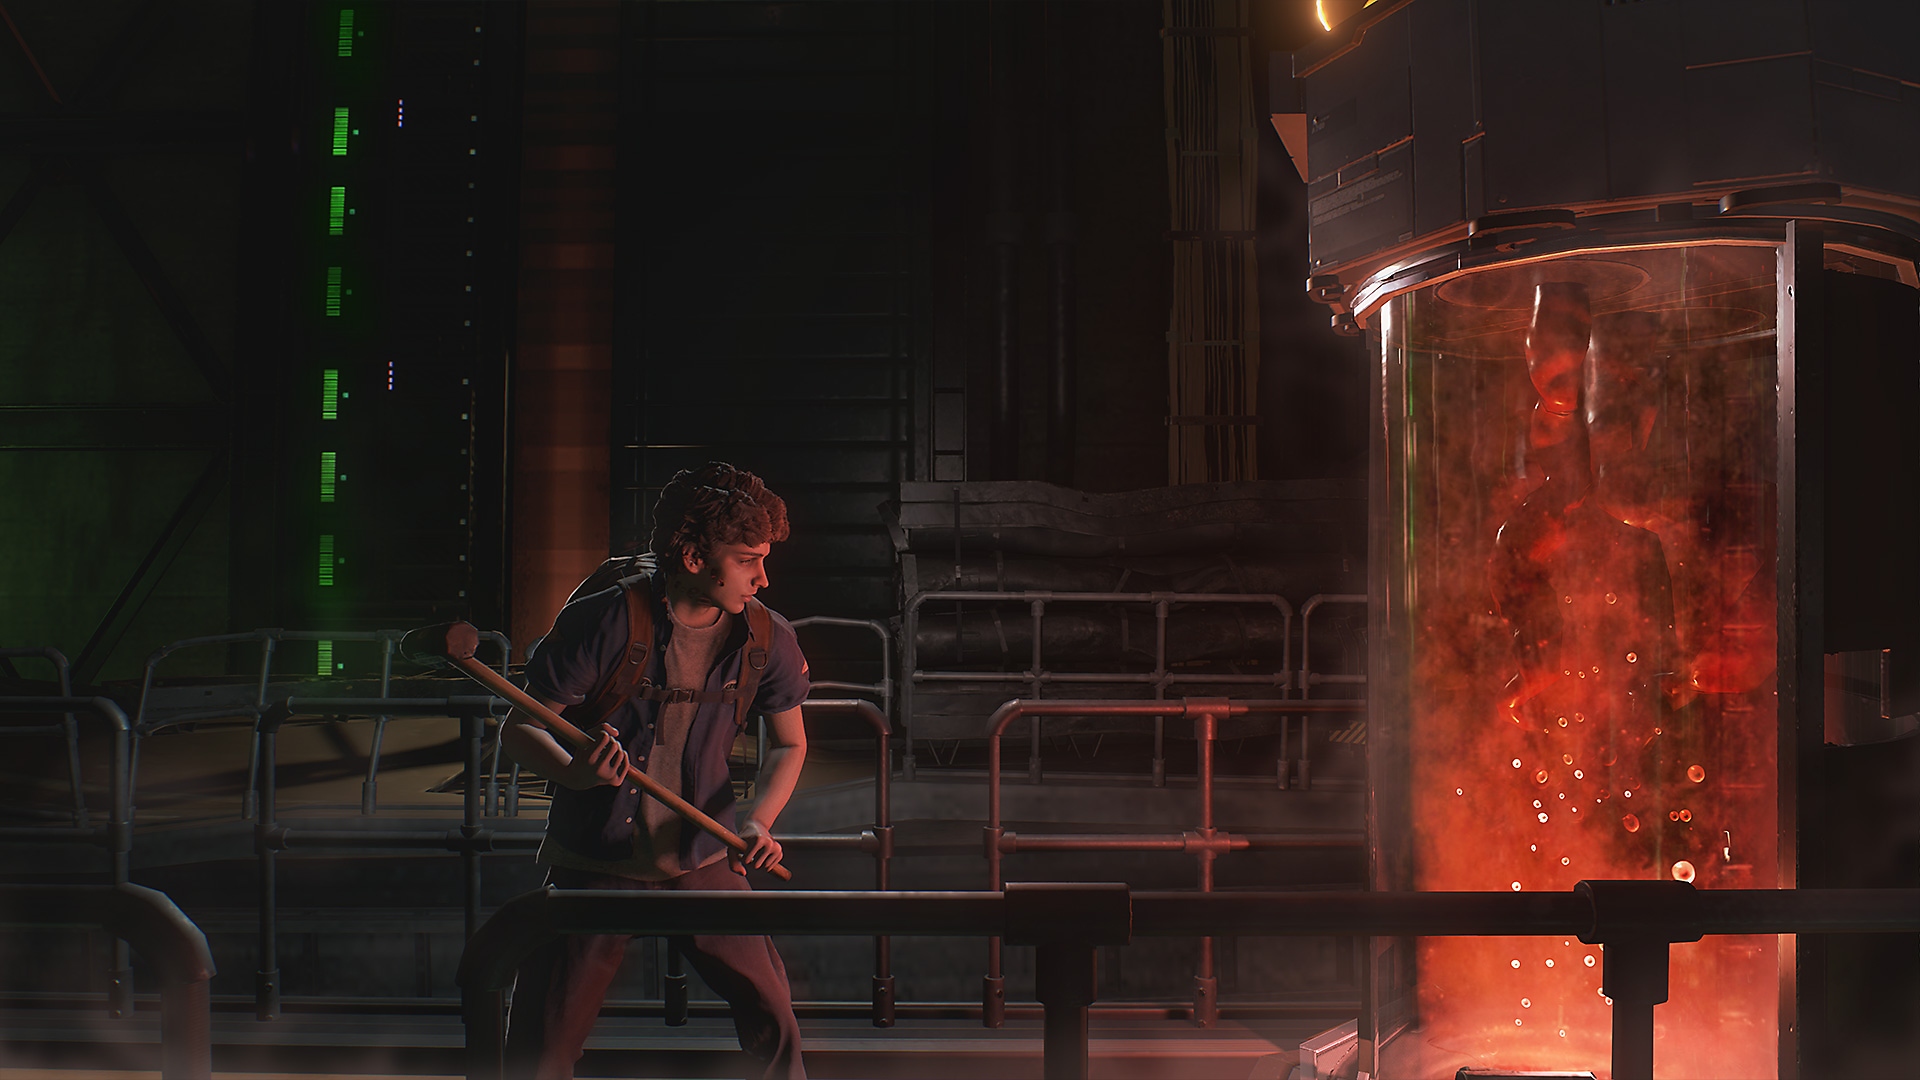  Resident Evil 3 – снимок экрана